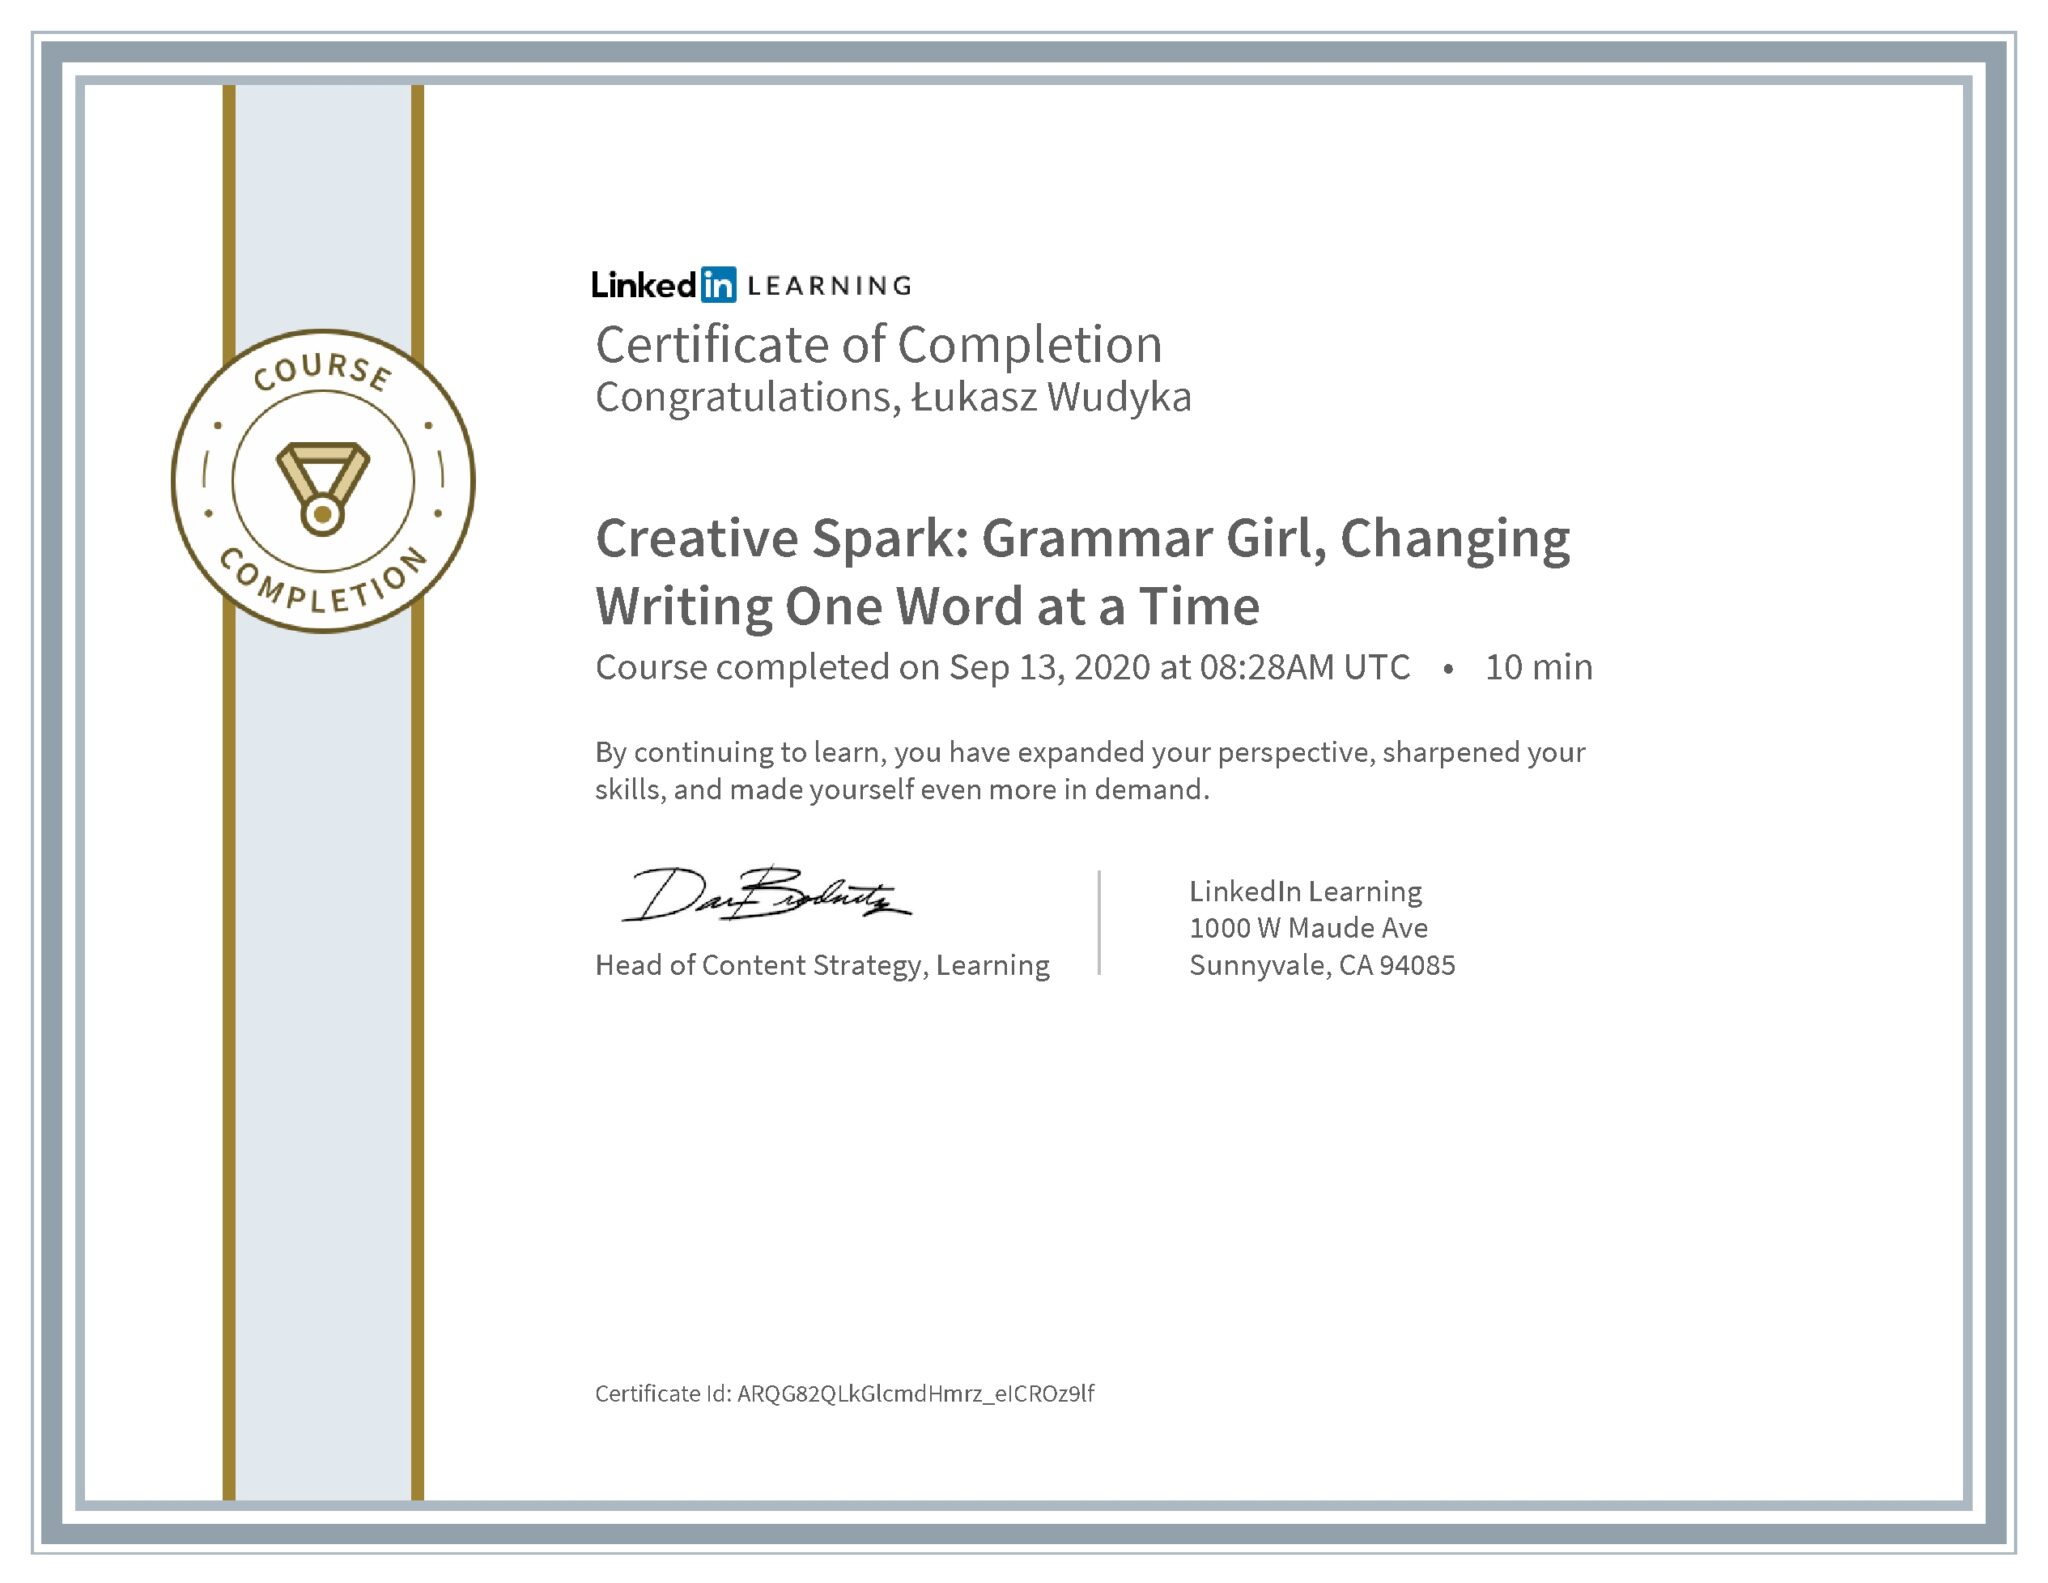 Łukasz Wudyka certyfikat LinkedIn Creative Spark: Grammar Girl, Changing Writing One Word at a Time